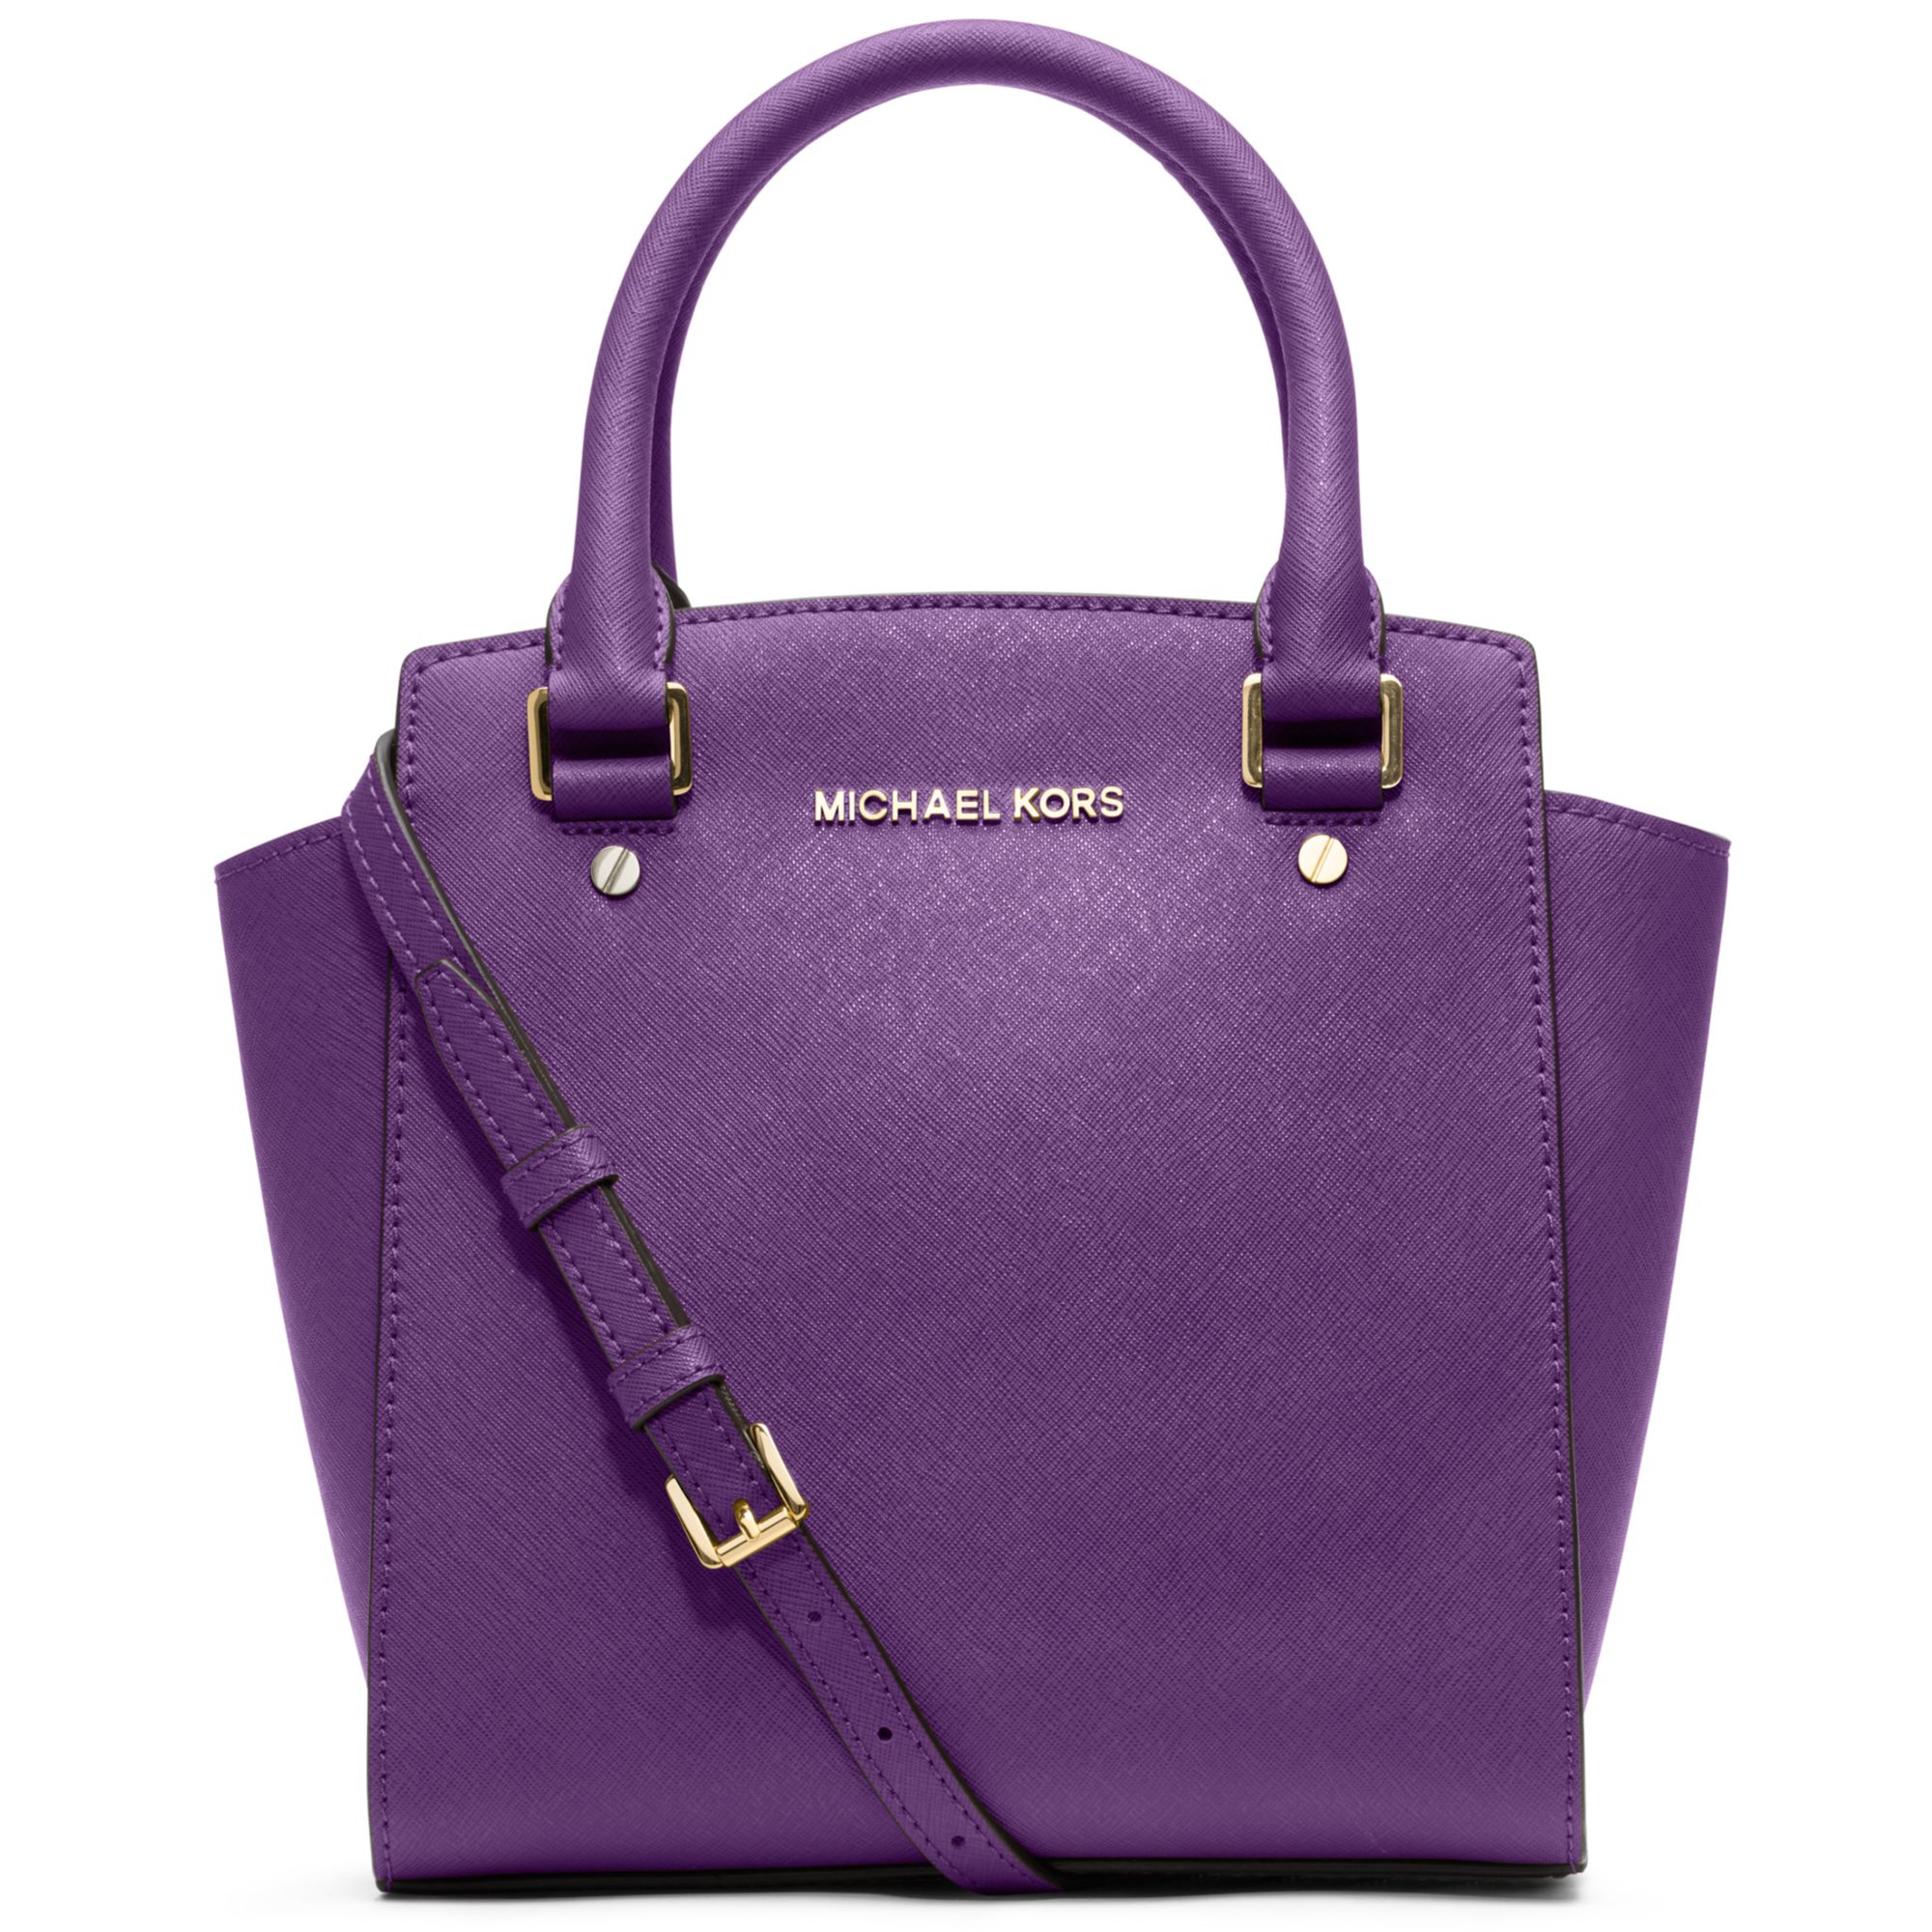 Lyst - Michael Kors Selma Large Messenger Bag in Purple